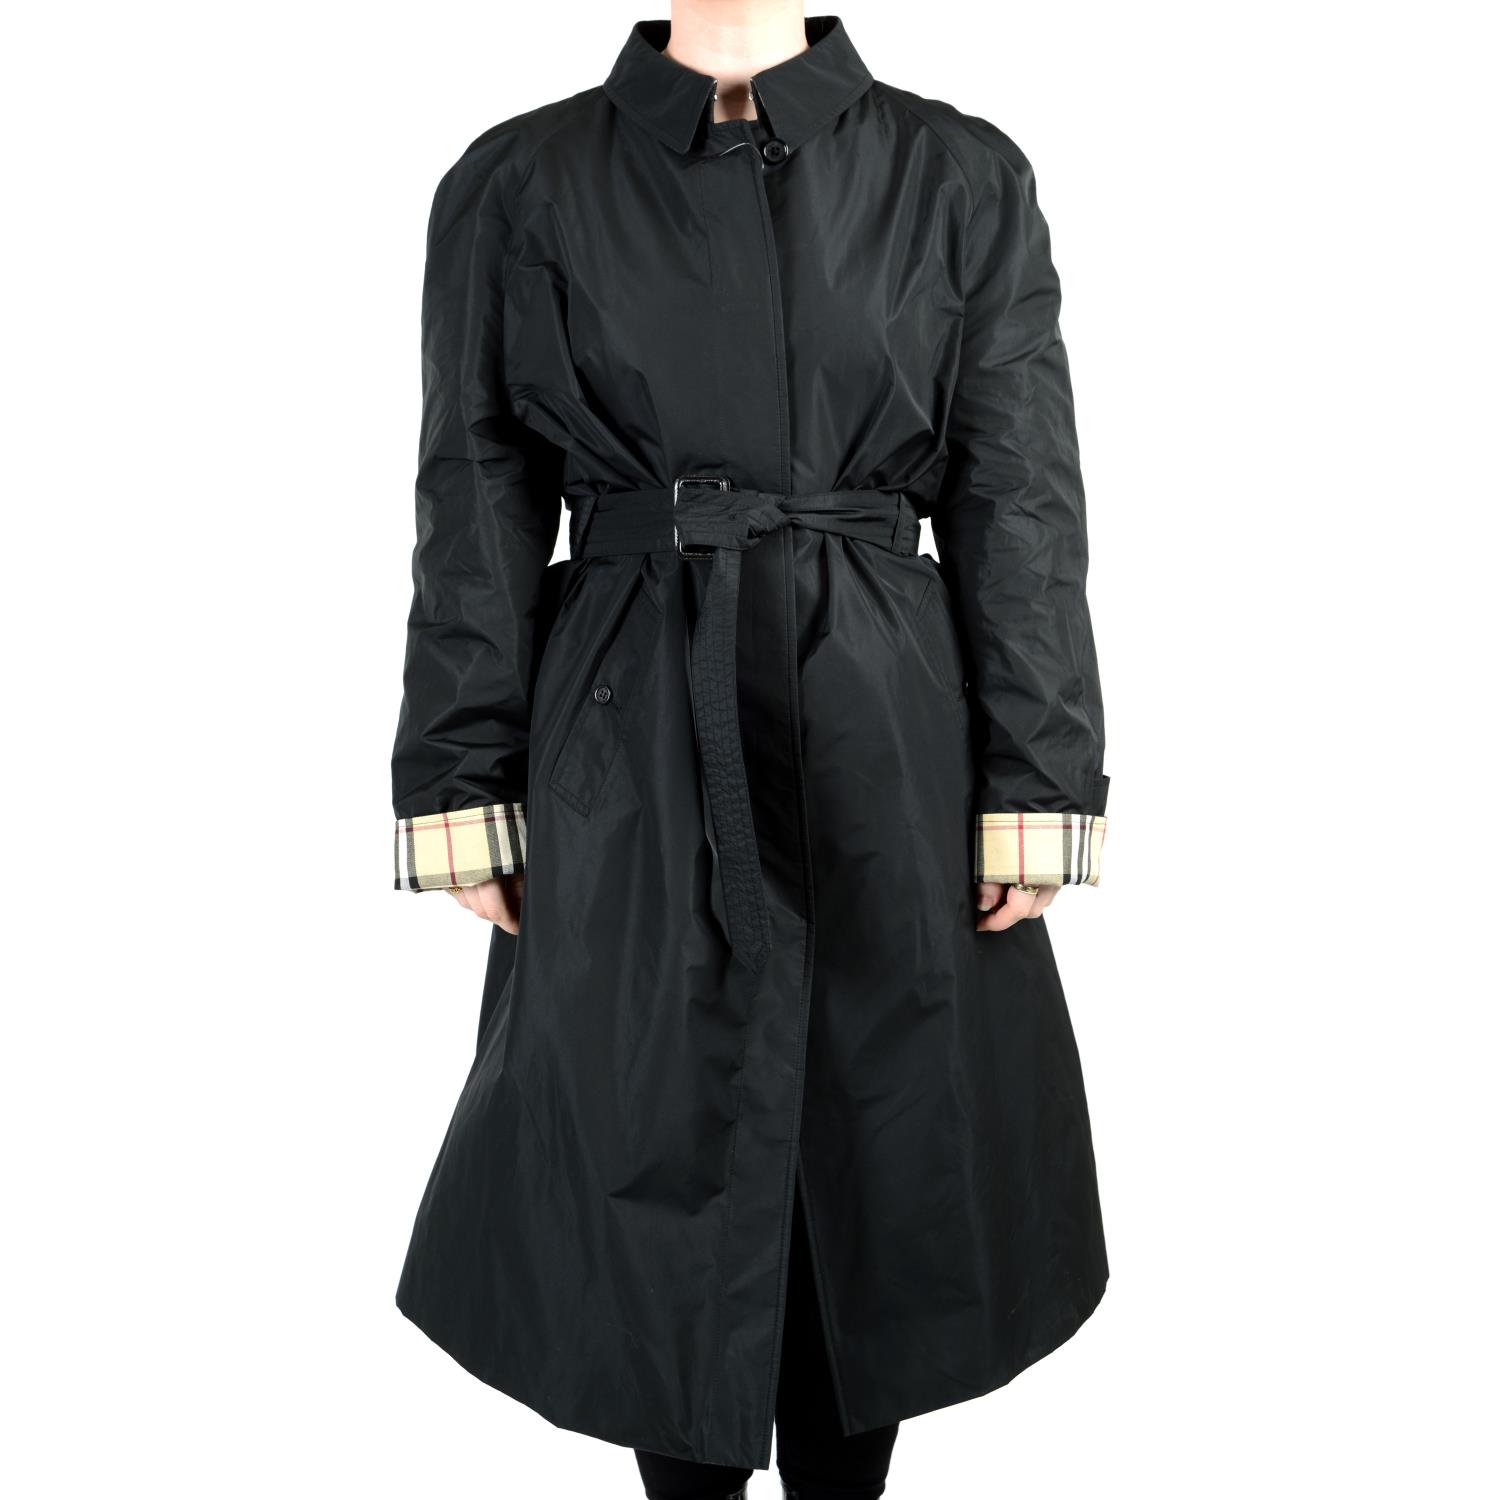 BURBERRY - a black raincoat.